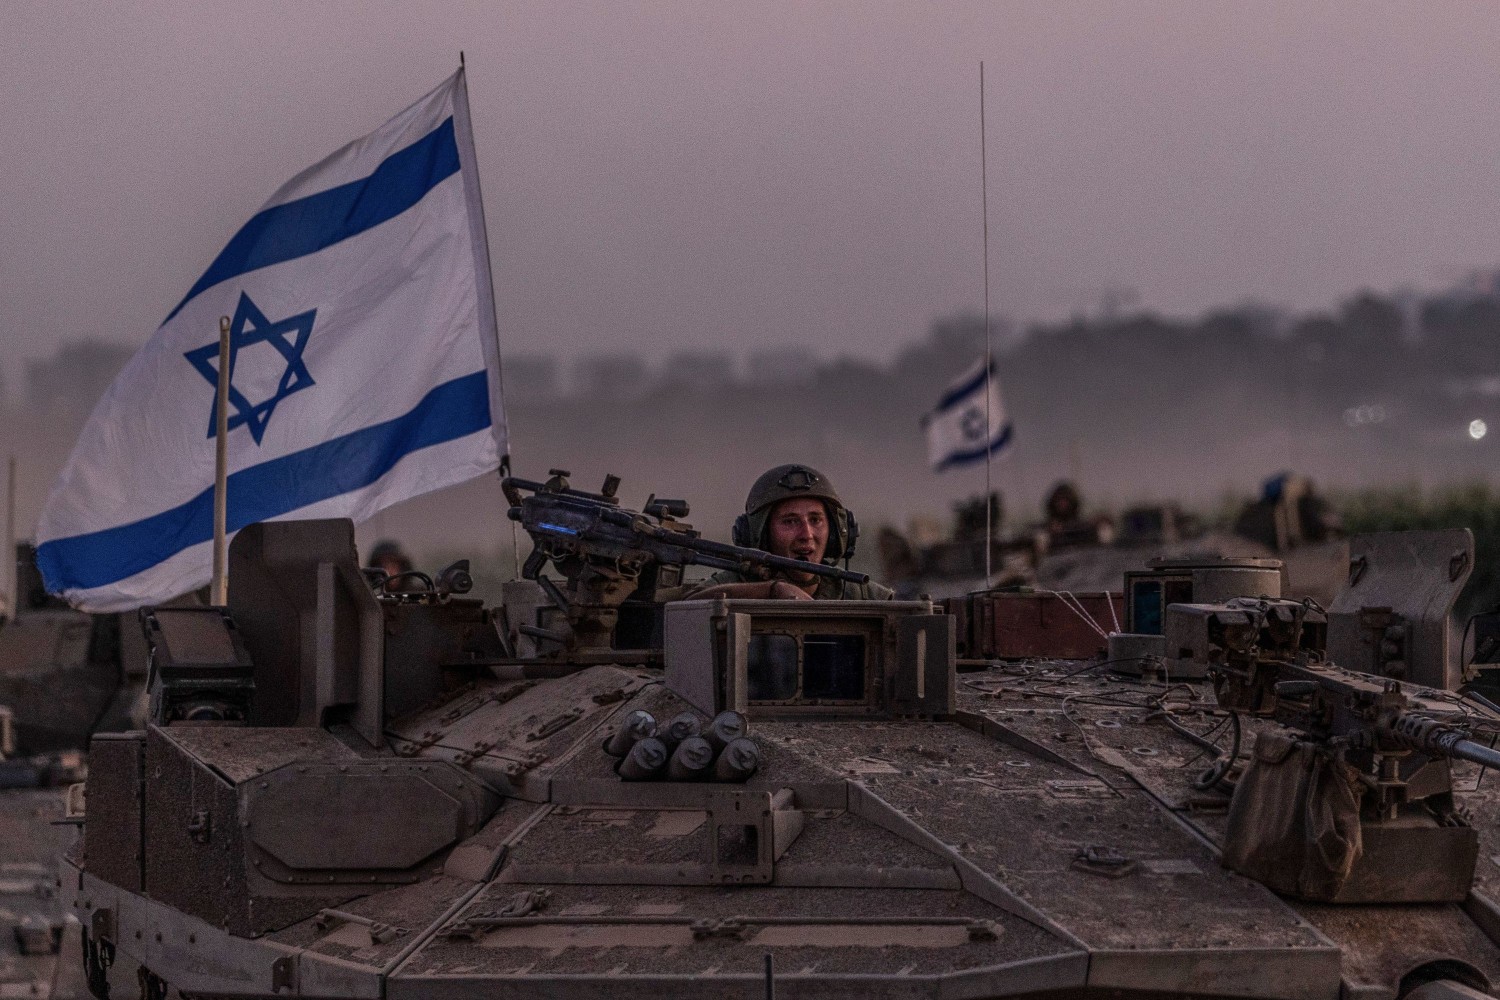 An Israeli soldier earlier this month in Sderot, Israel, near the Gaza border. ILIA YEFIMOVICH/DPA/ZUMA PRESS